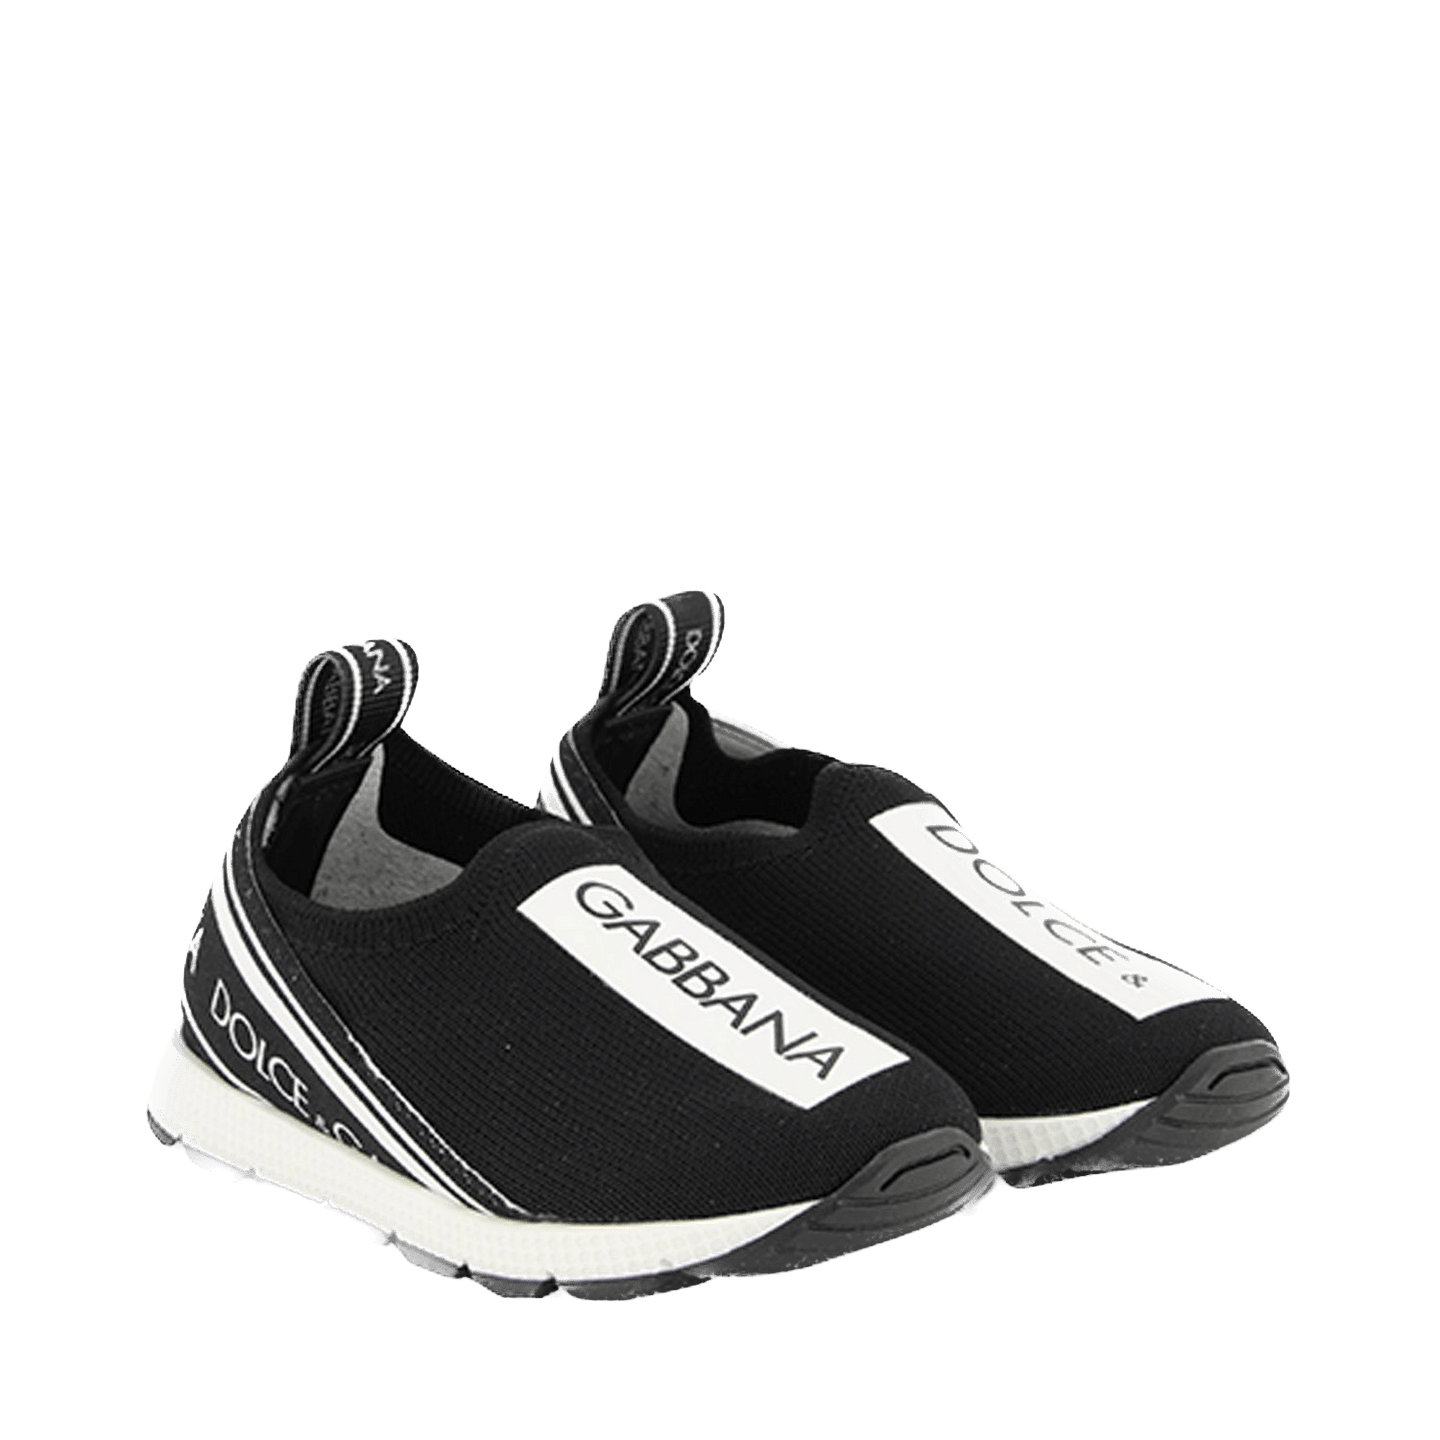 Dolce & Gabbana Kinder Unisex Sneakers Zwart 24